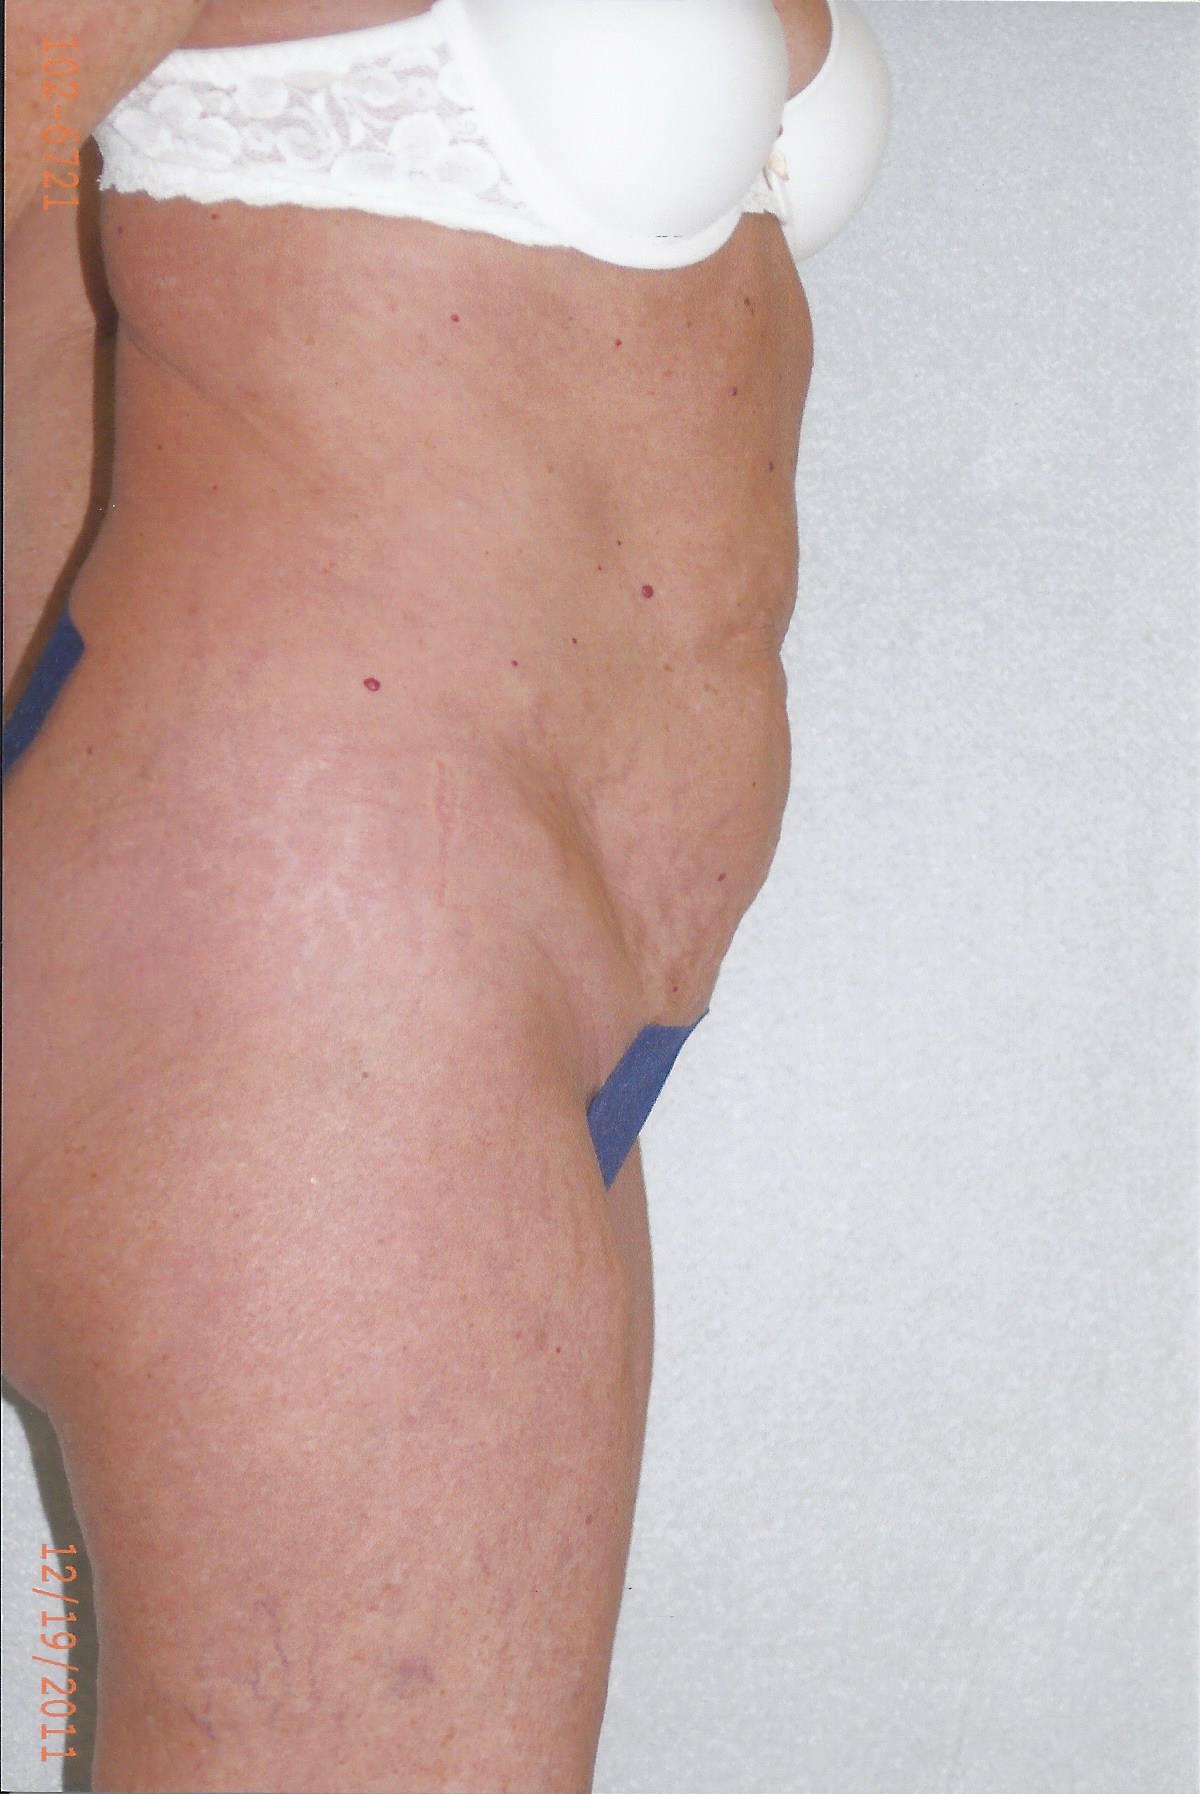 Abdominoplasty - Dr. Richard Bosshardt